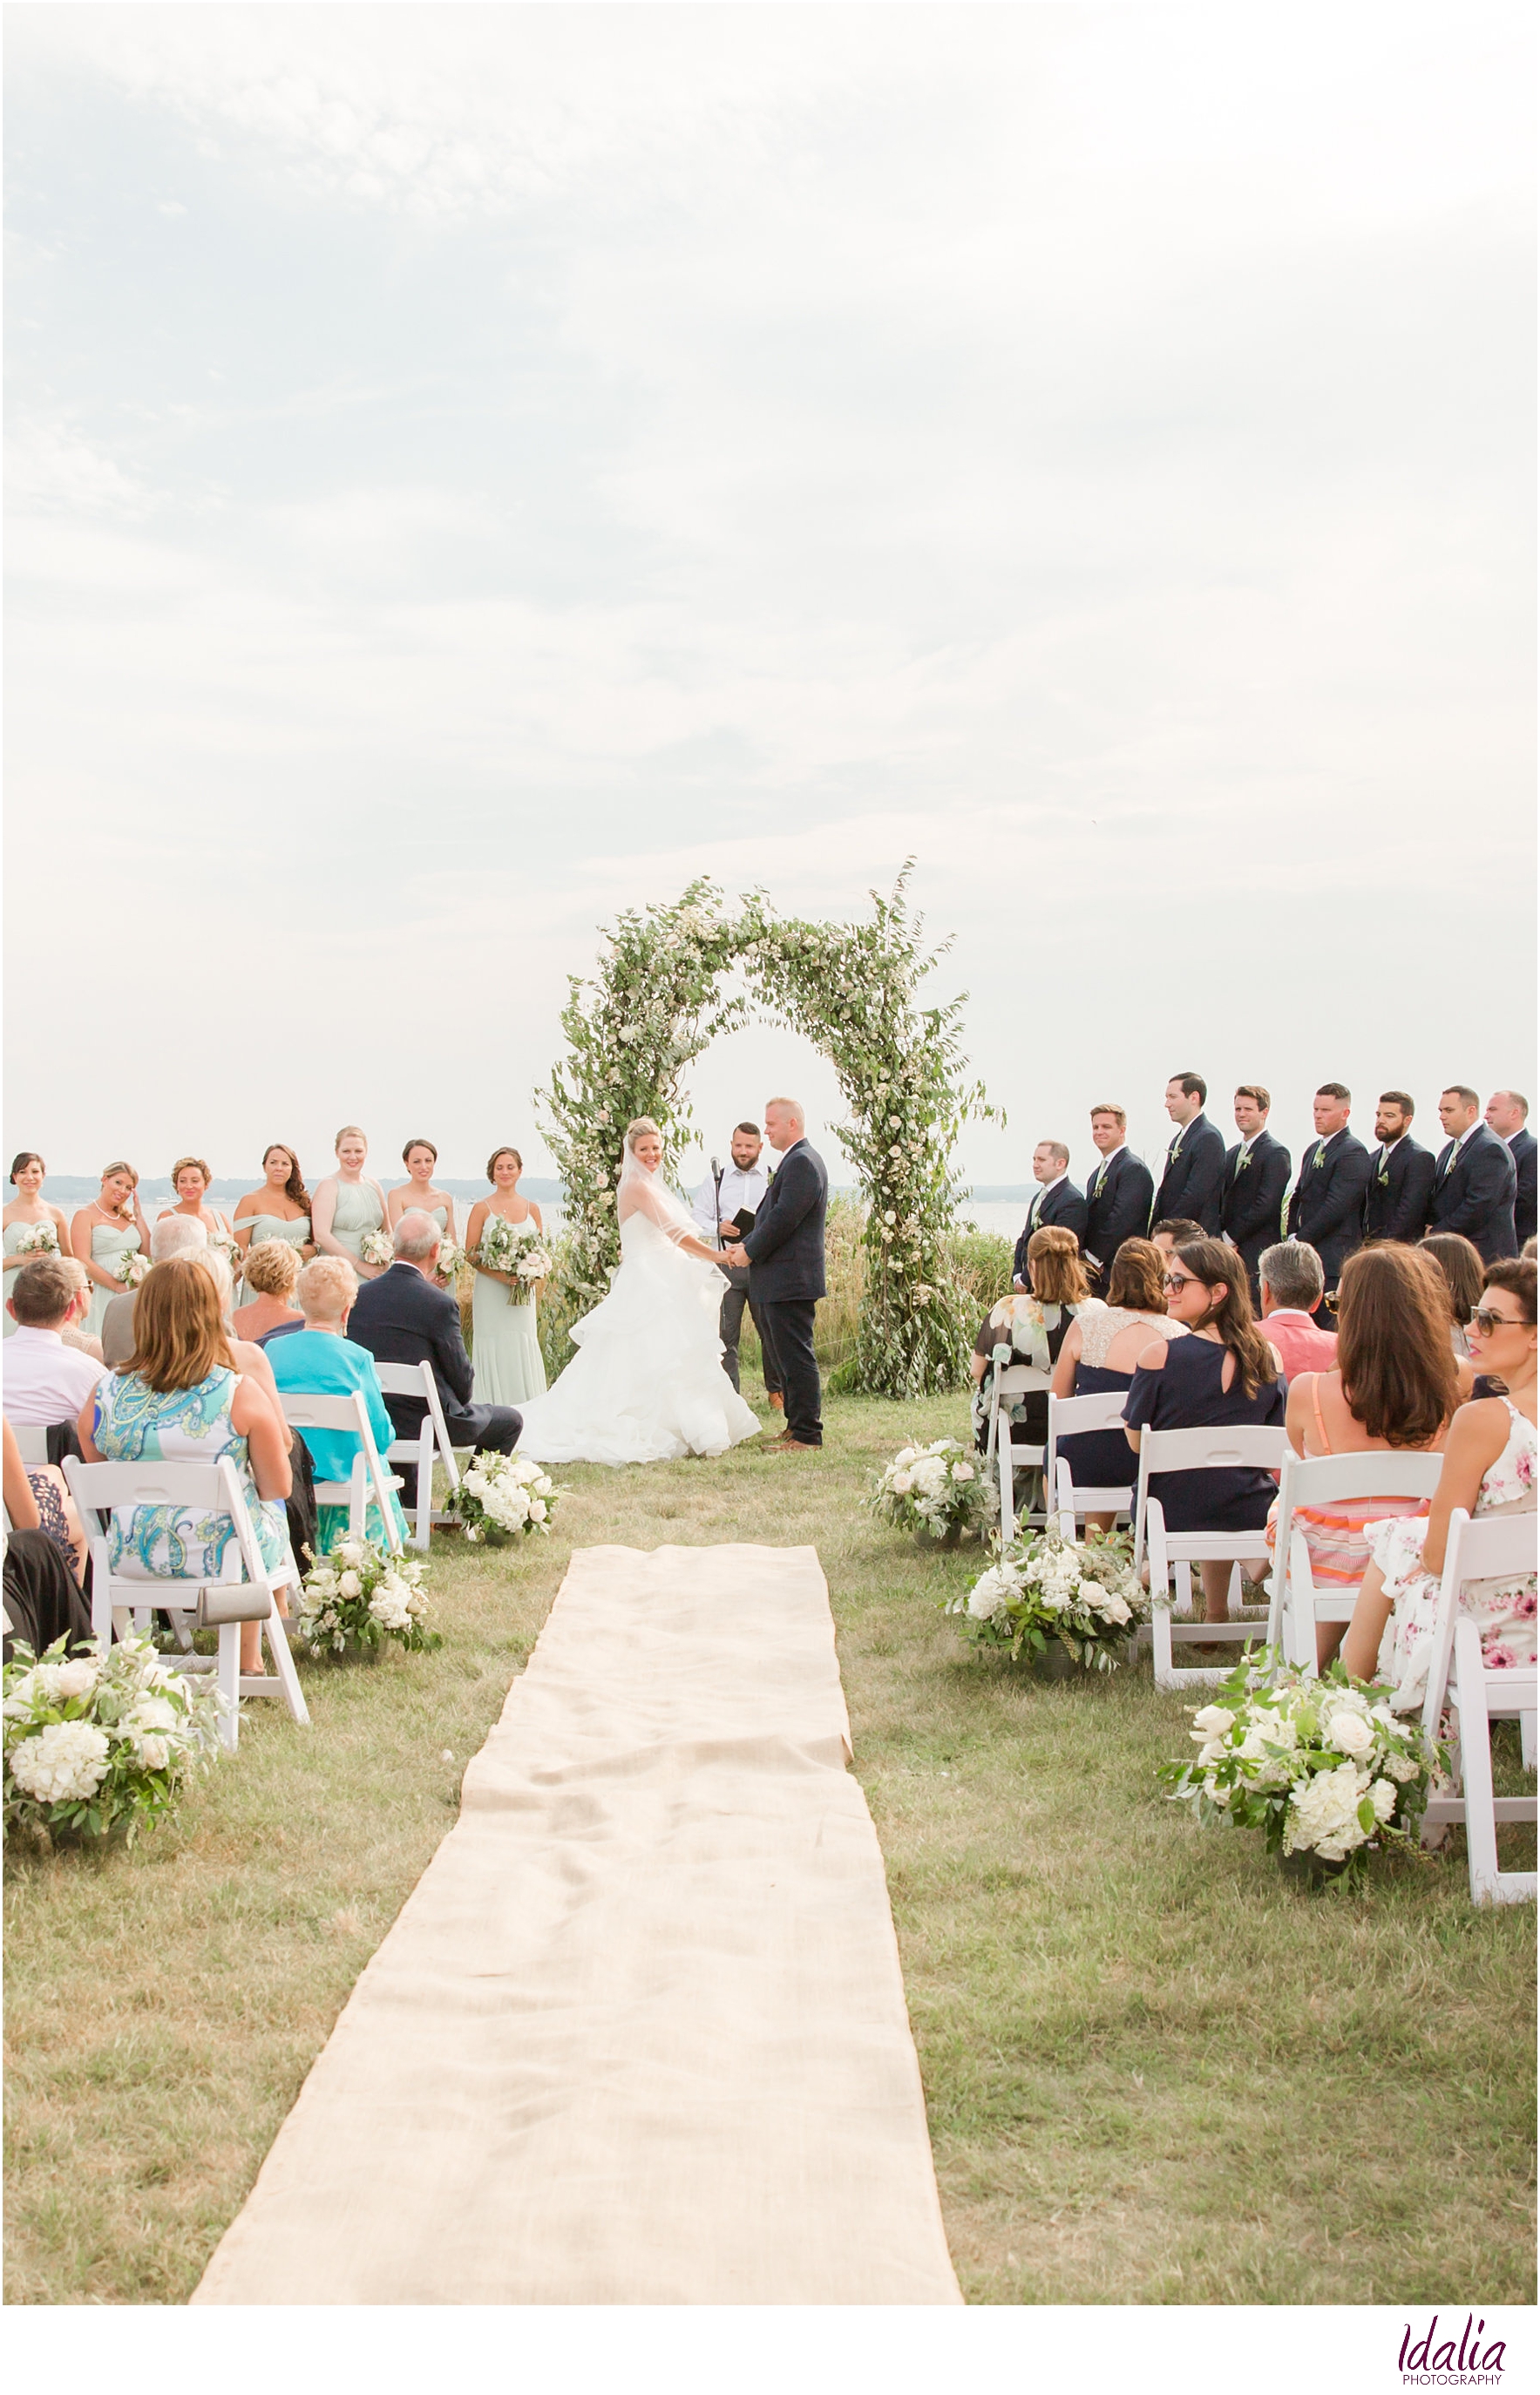 Click to view outdoor weddings at Sandy Hook Chapel in Atlantic Highlands, NJ | #njweddingvenue #sandyhookchapel